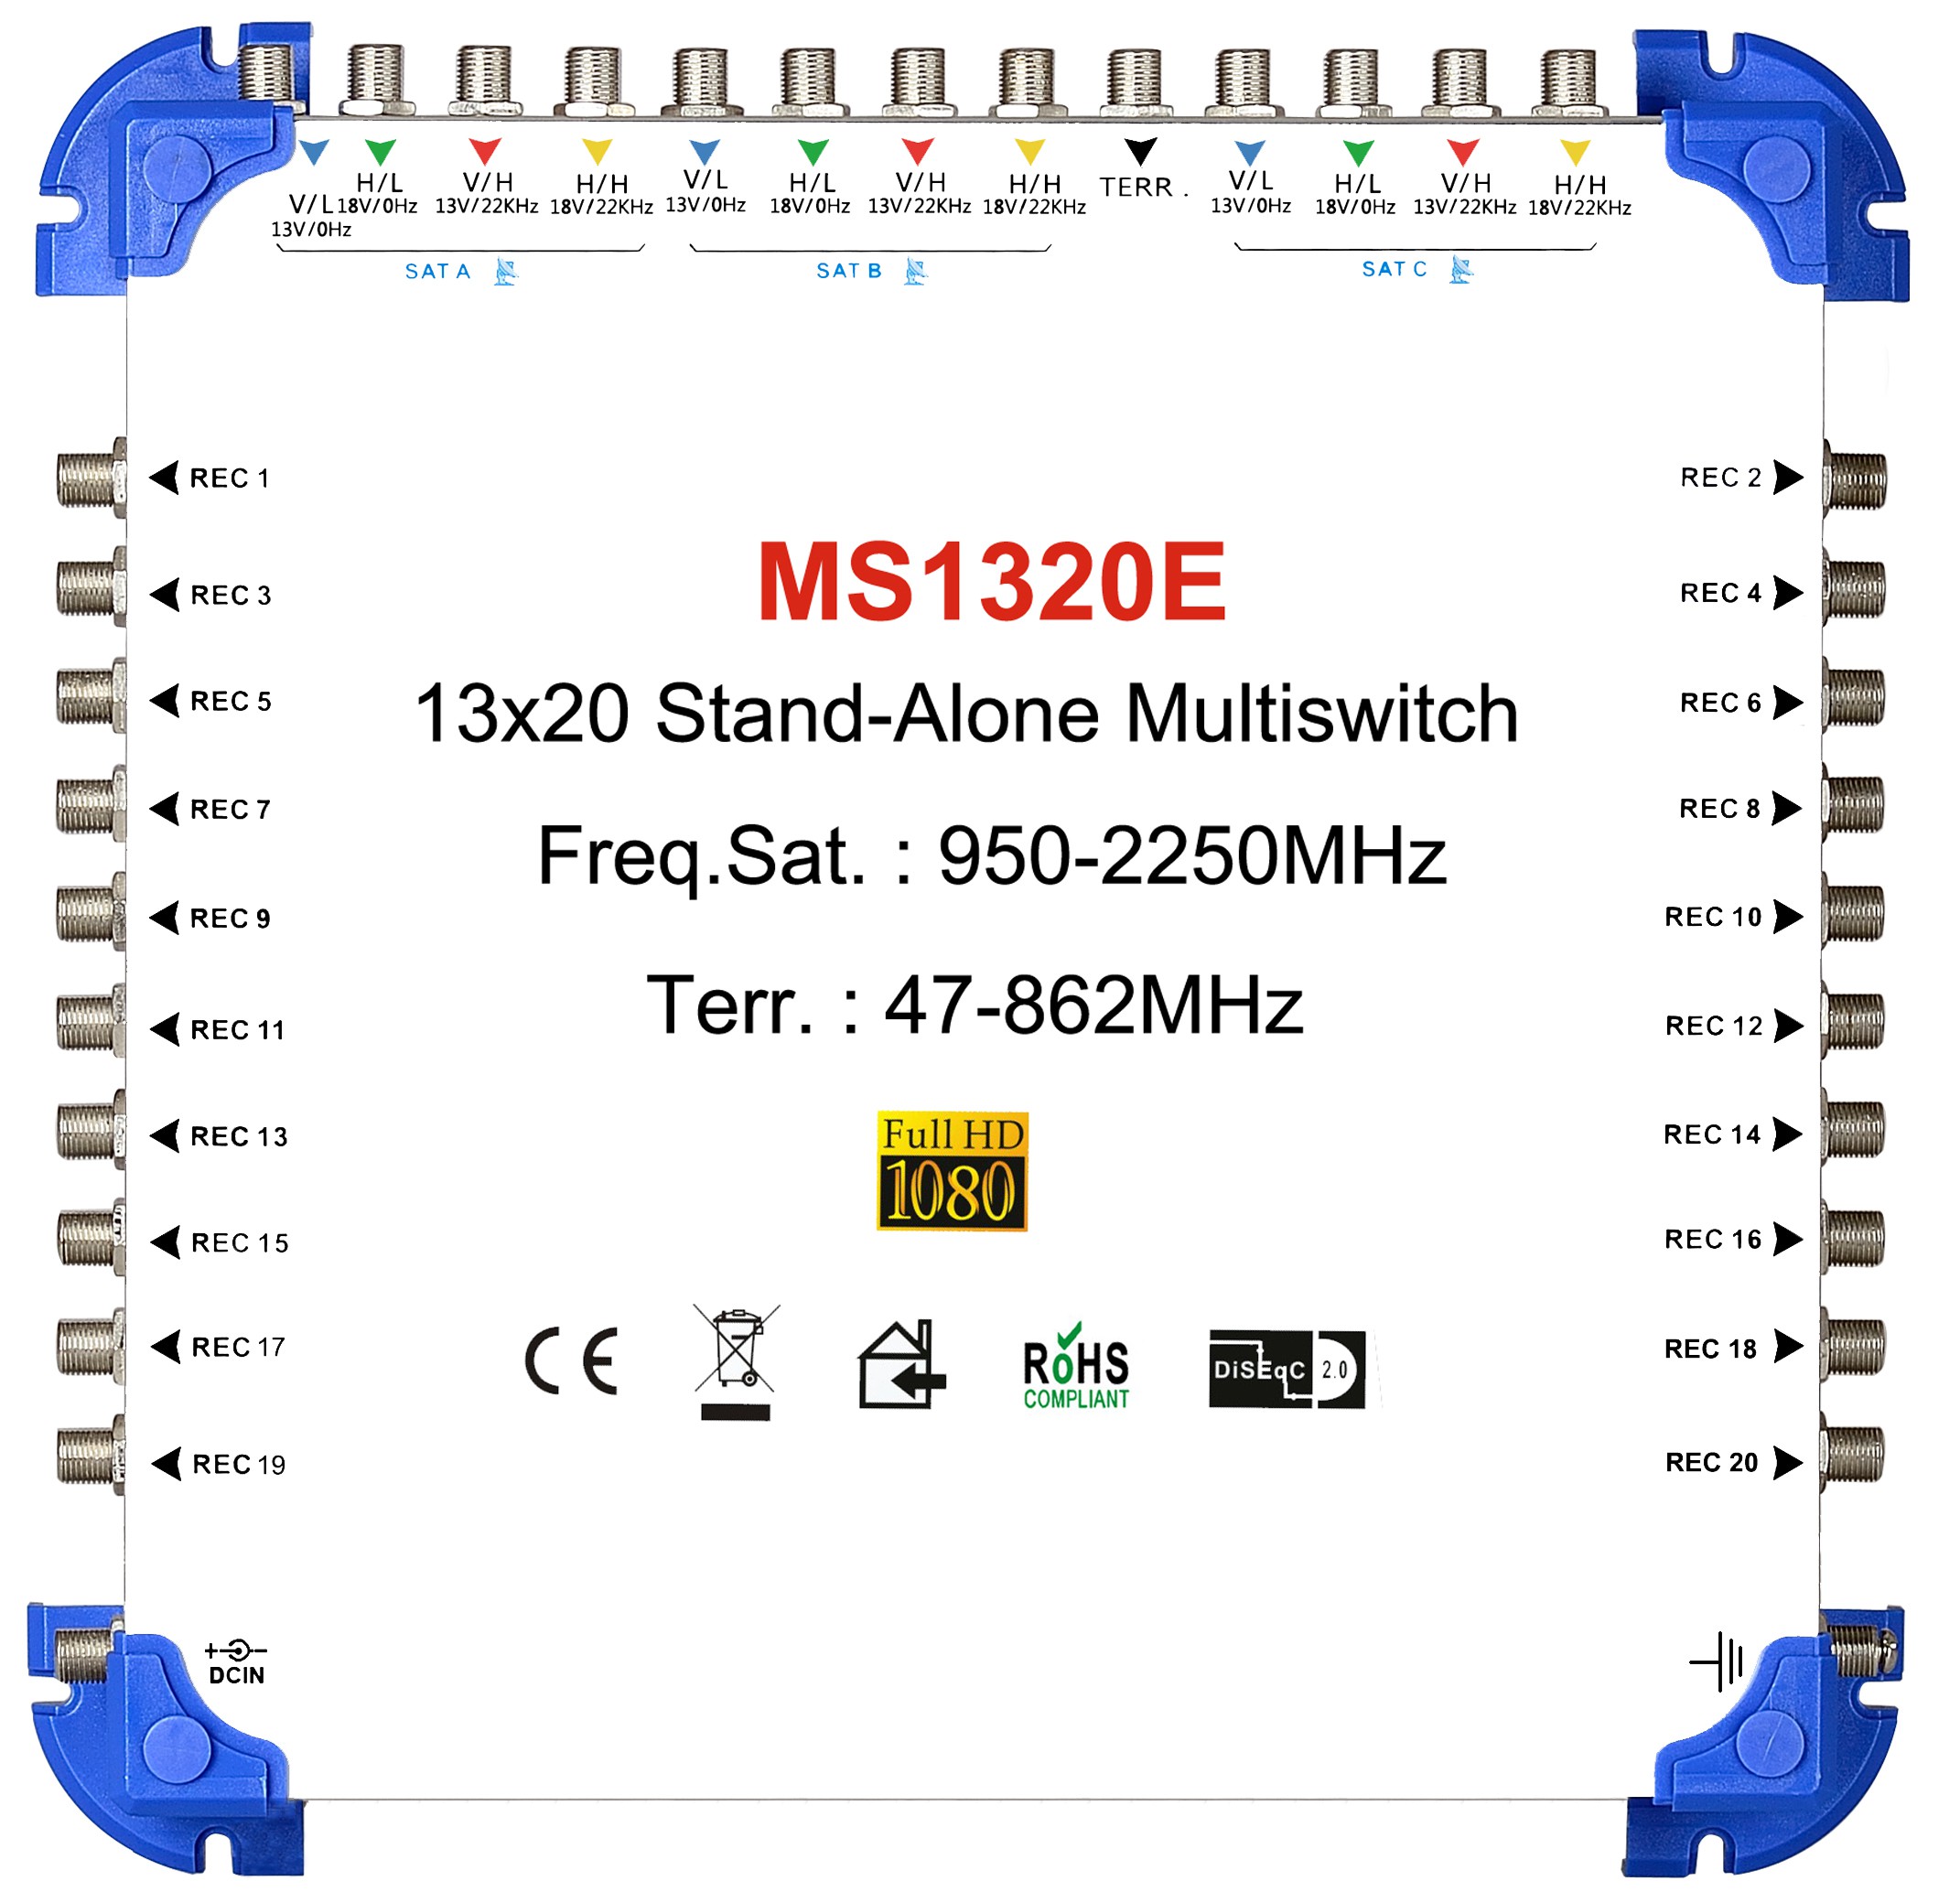 13x20 satellite multi-switch, Stand-Alone multiswitch